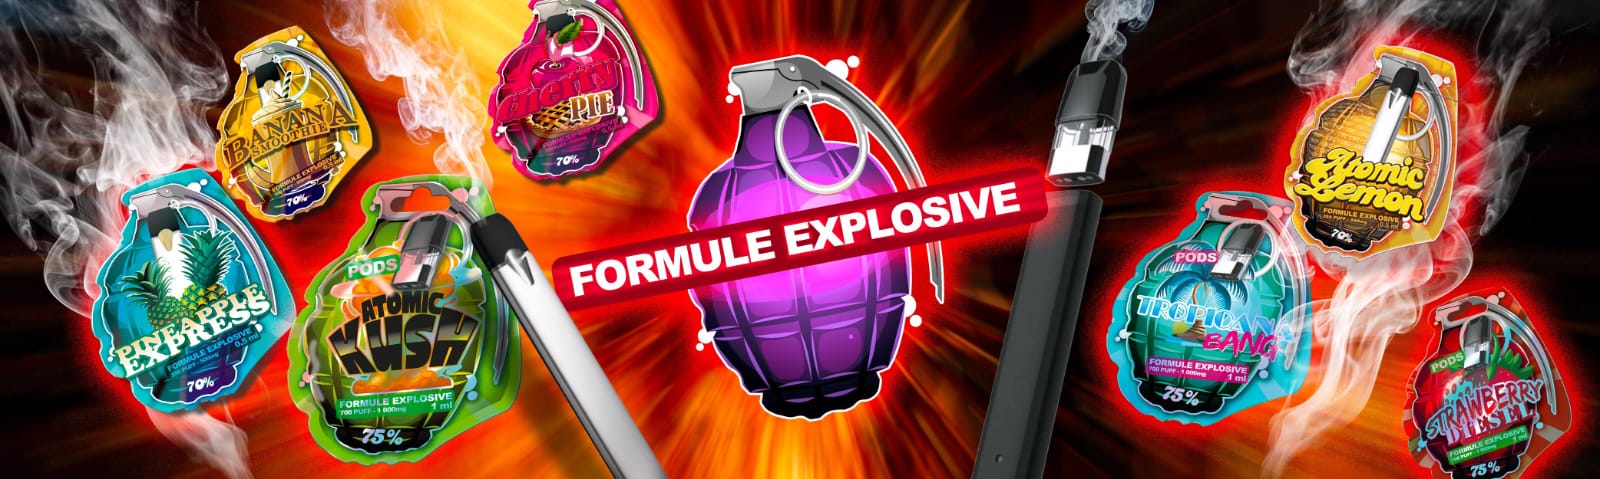 Formule Explosive